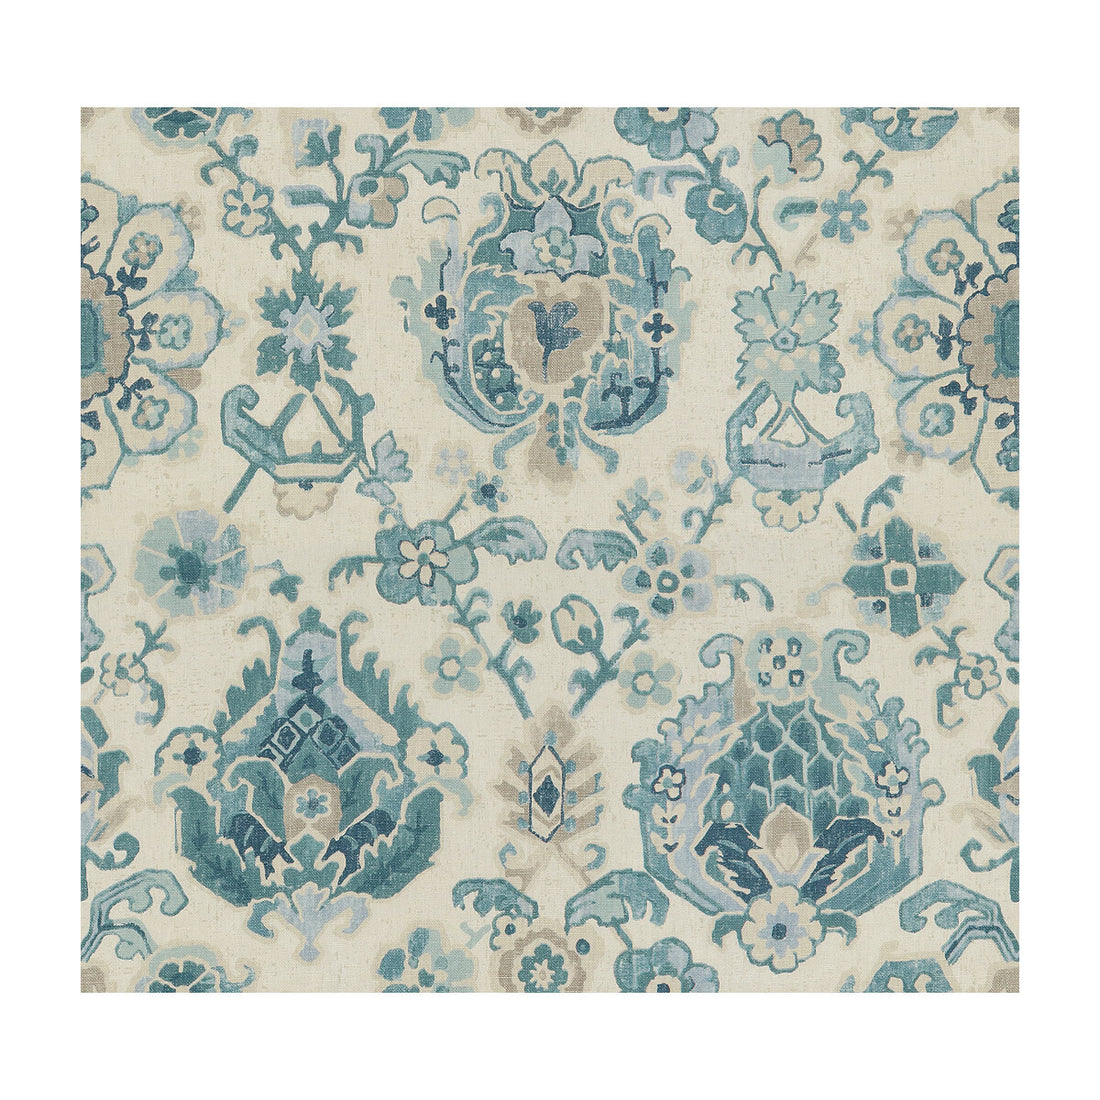 Saroukrug fabric in aquamarine color - pattern SAROUKRUG.35.0 - by Kravet Basics in the Sarah Richardson Harmony collection